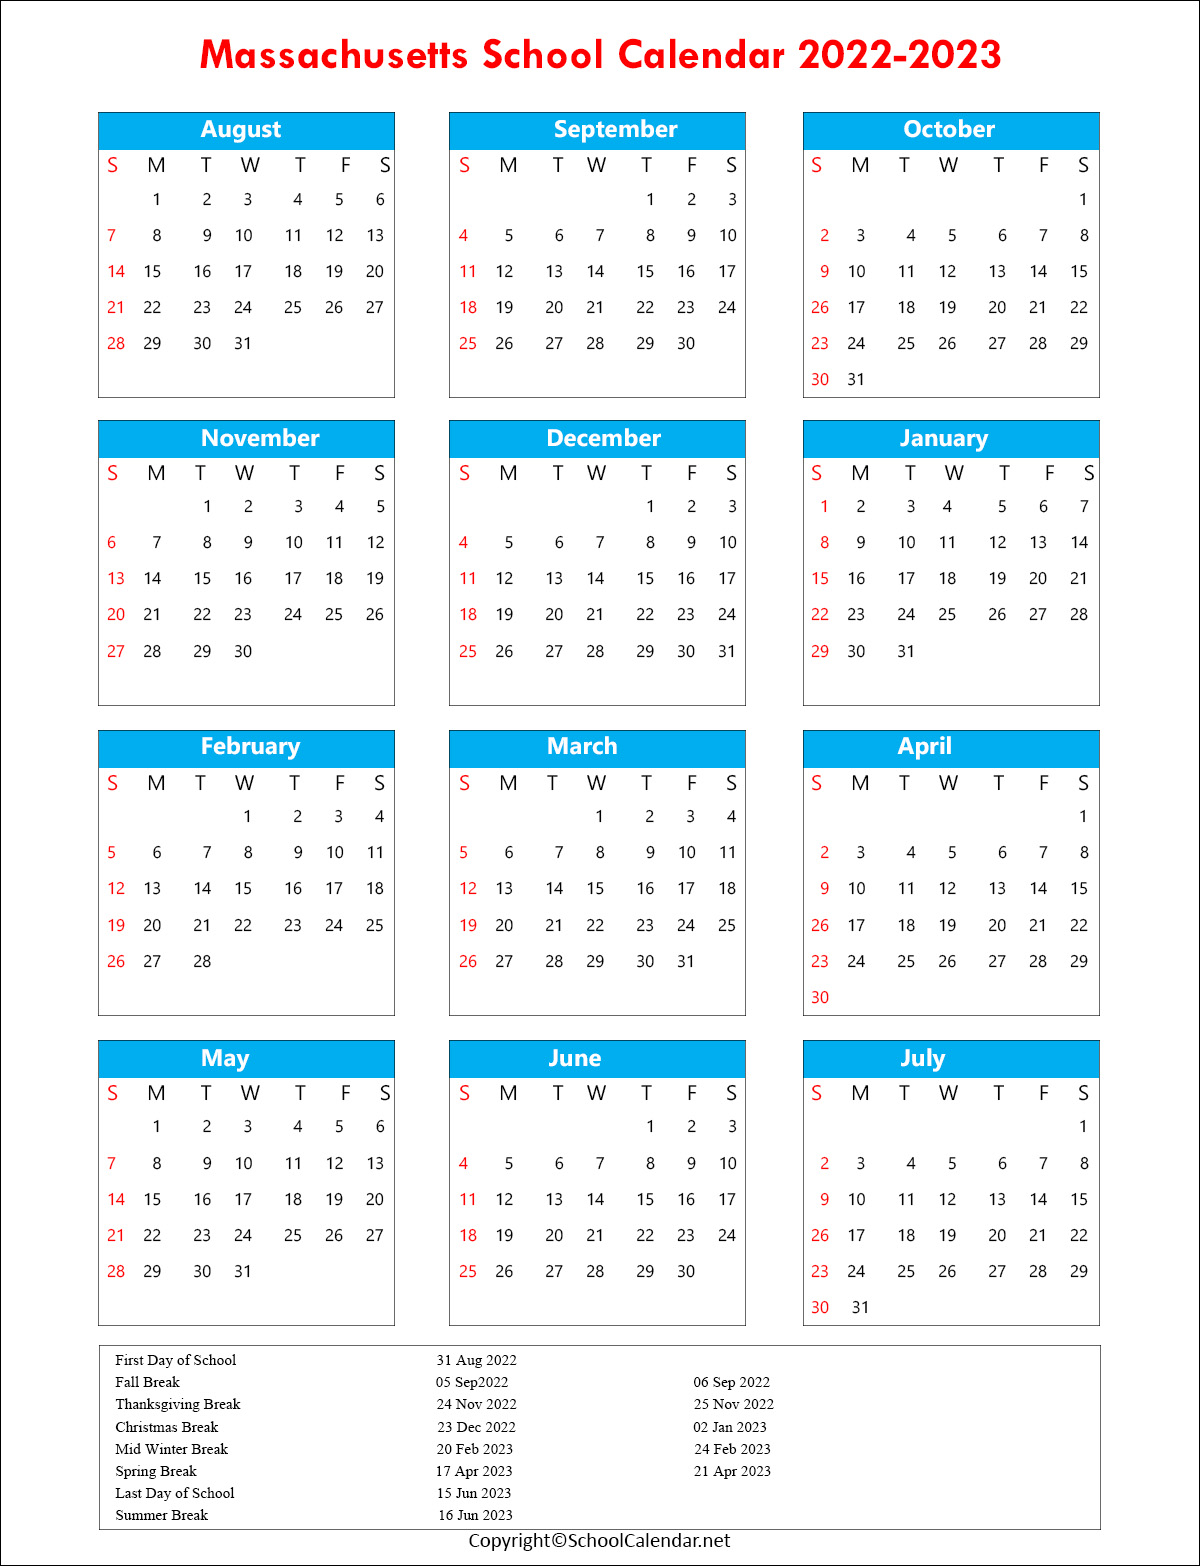 Massachusetts School Holiday Schedule 2022